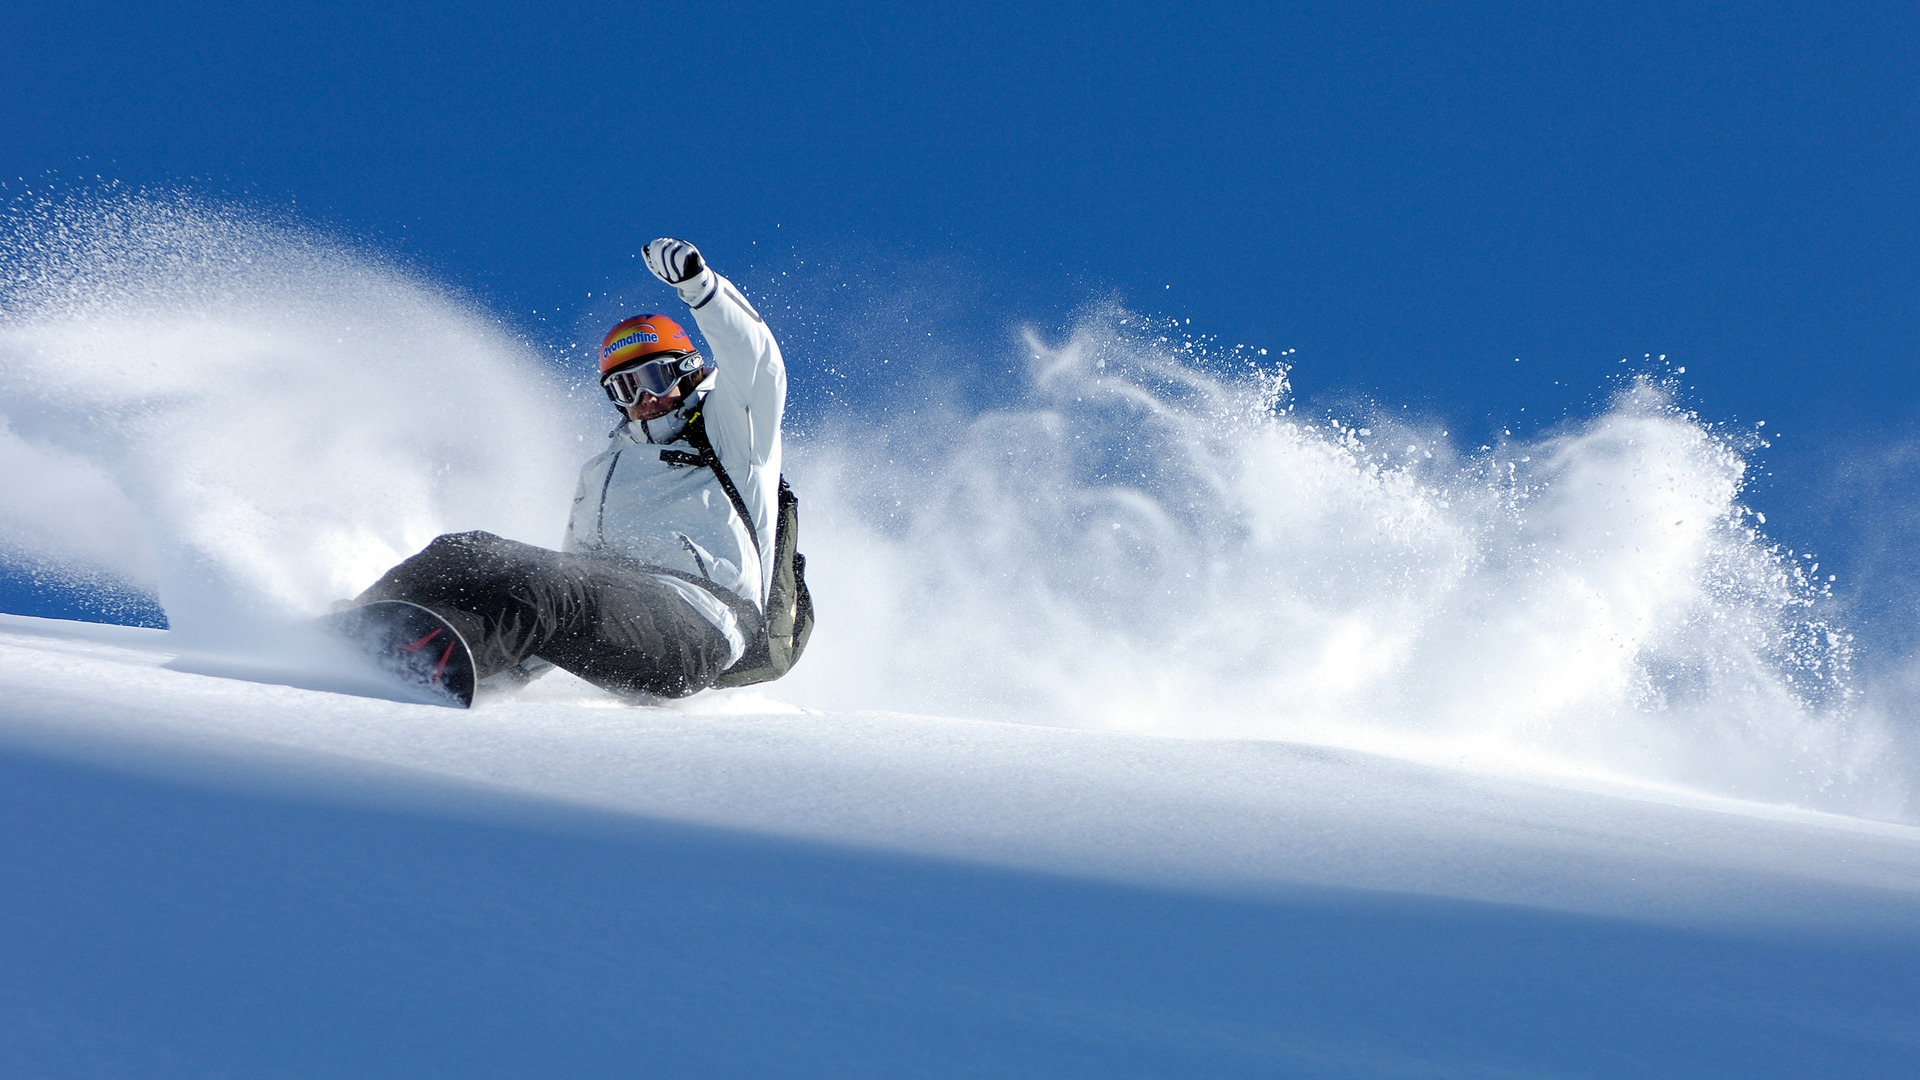 Winter Snowboarding Sport for 1920 x 1080 HDTV 1080p resolution